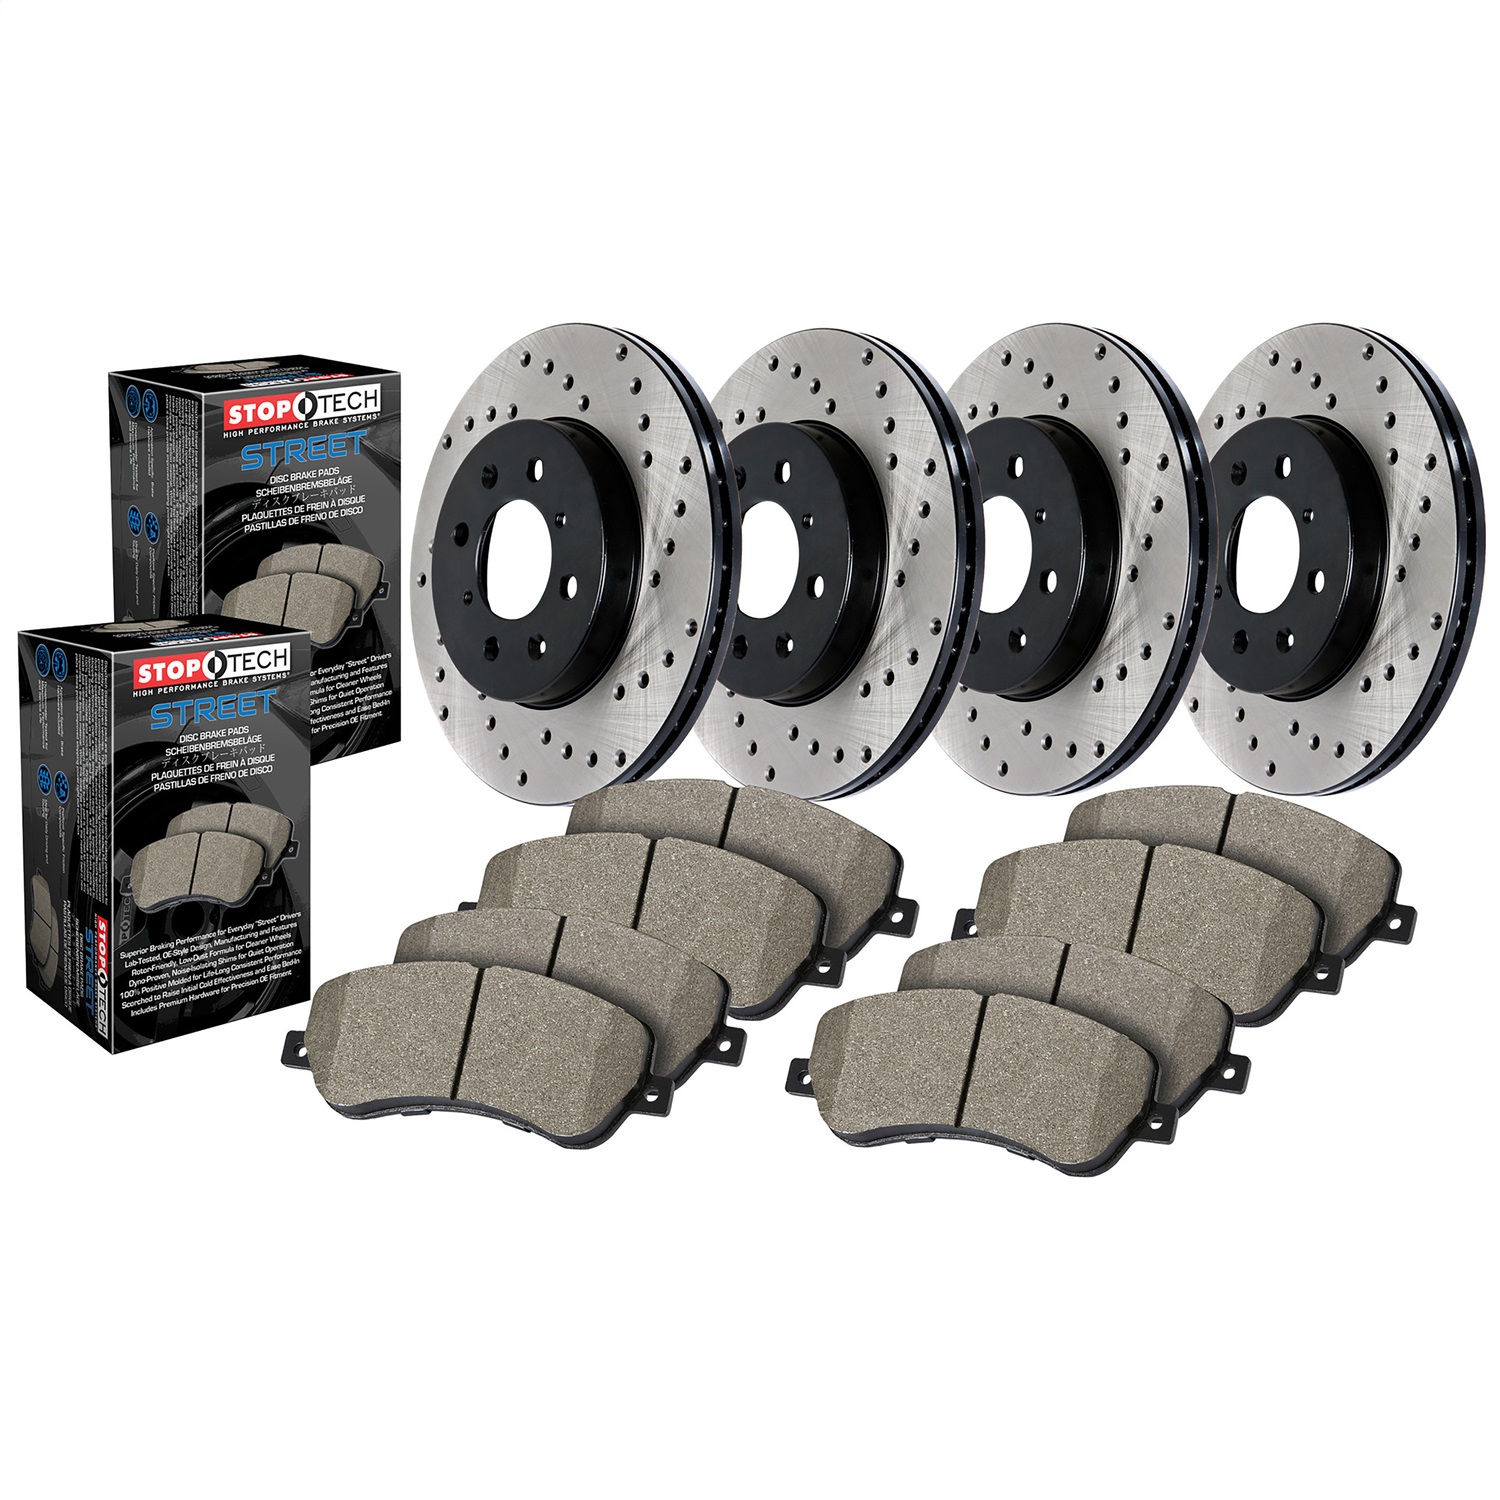 StopTech 936.34005 Street - 4 Wheel Disc Brake Kit w/Cross-Drilled Rotor Fits M3